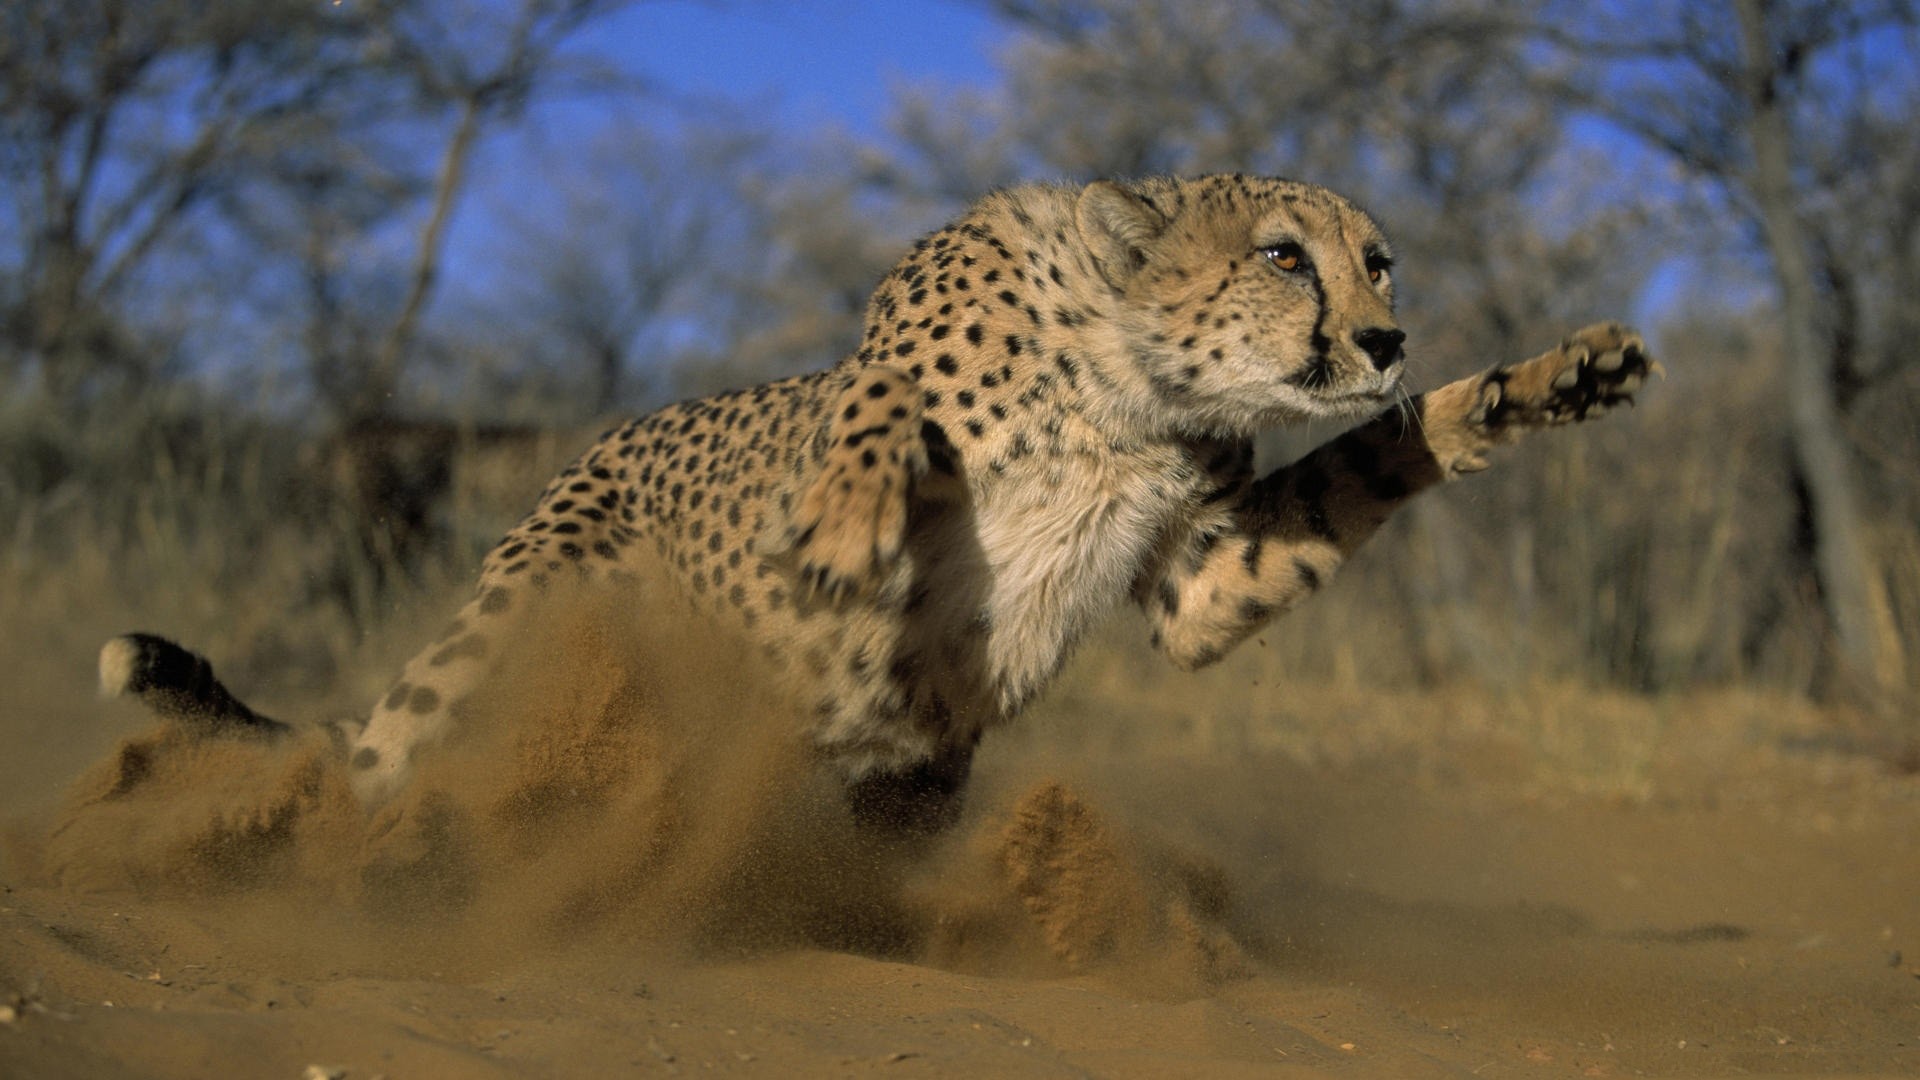 General 1920x1080 animals cheetahs big cats sand jumping wildlife cats frontal view mammals